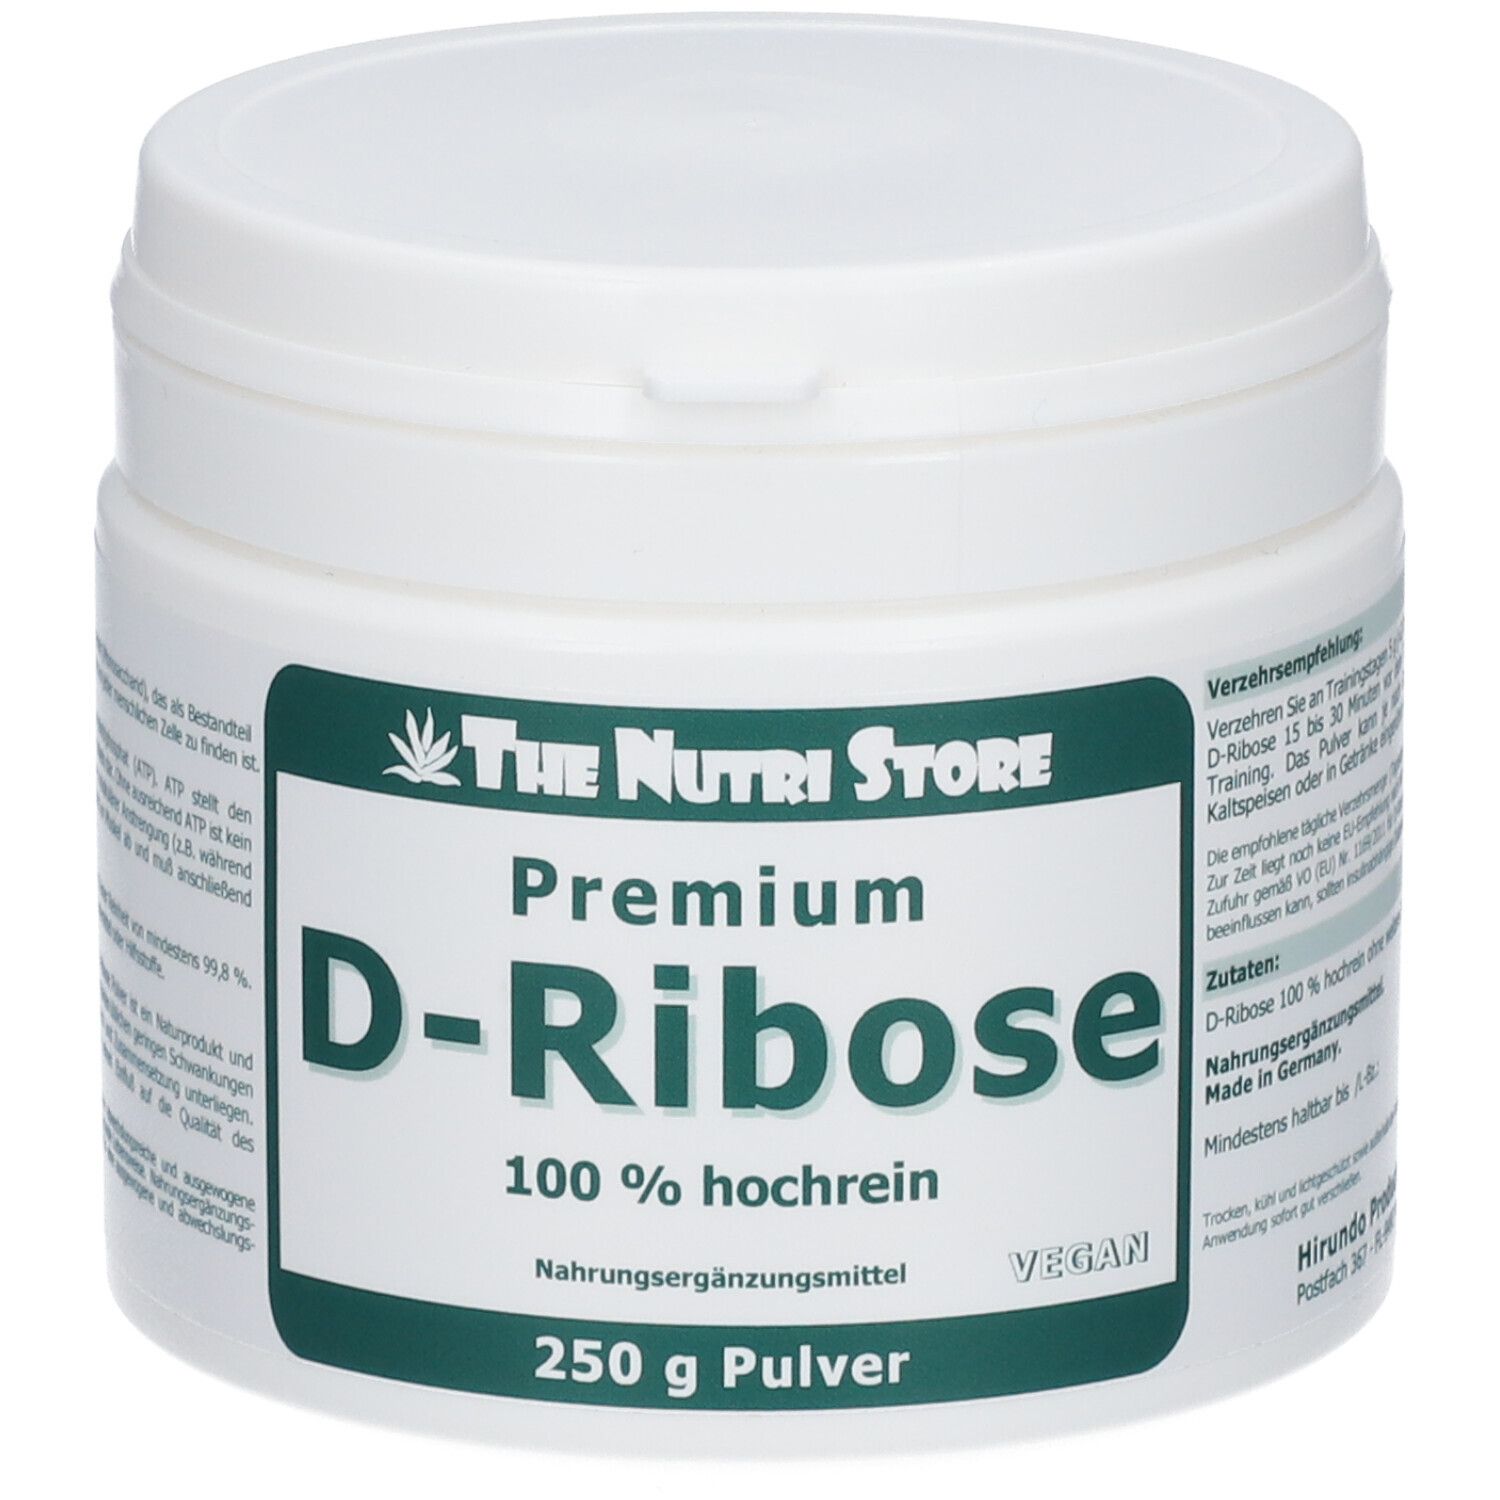 Premium D-Ribose